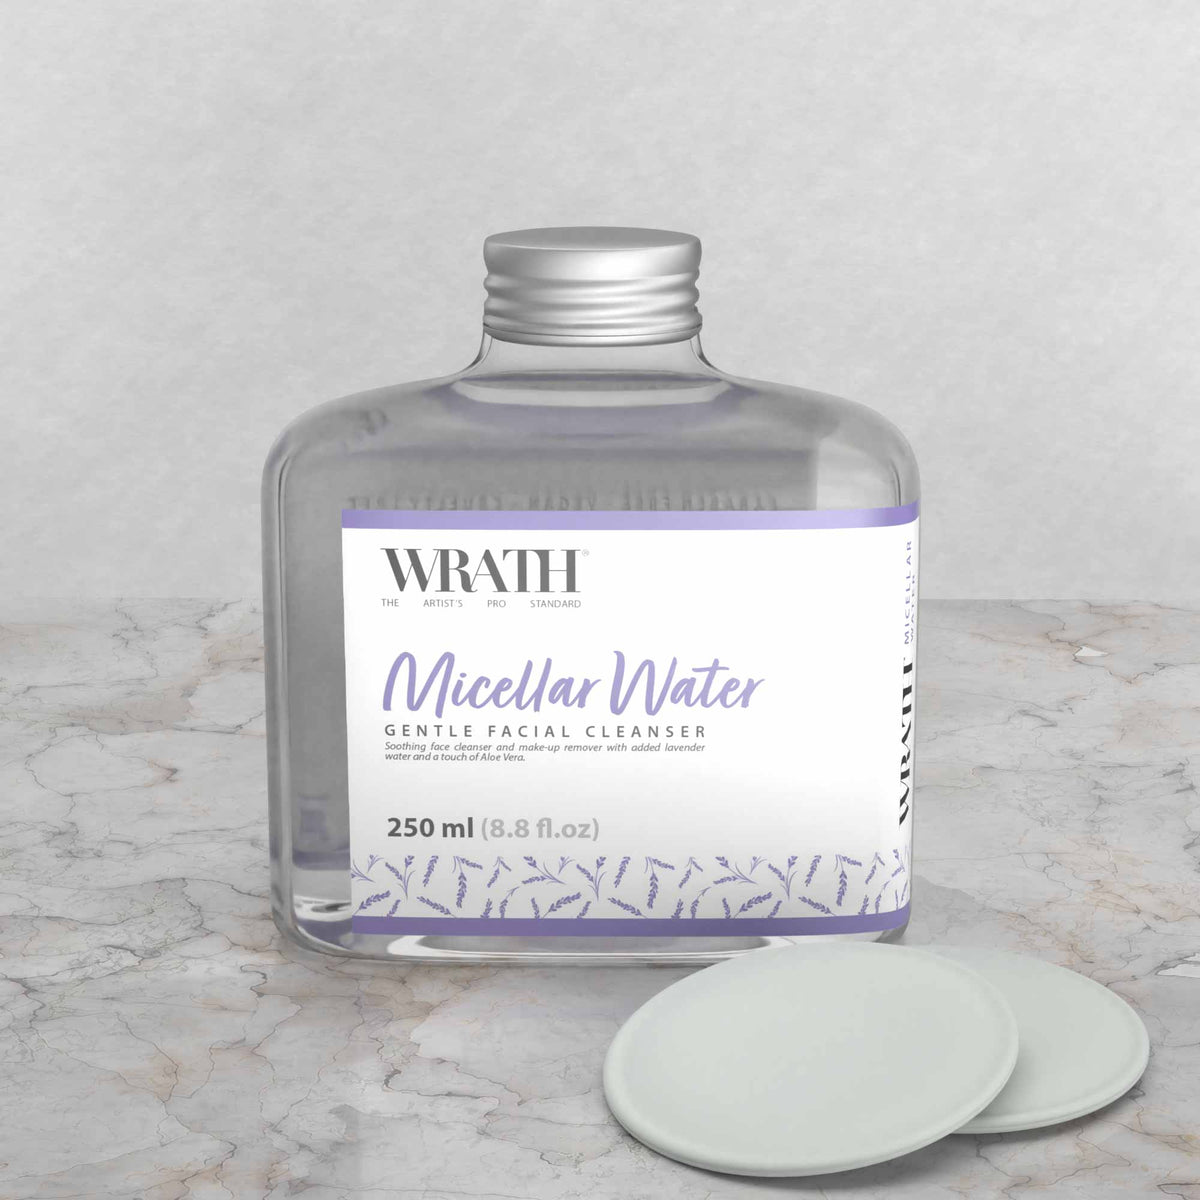 WRATH Micellar Water - Facial Cleanser